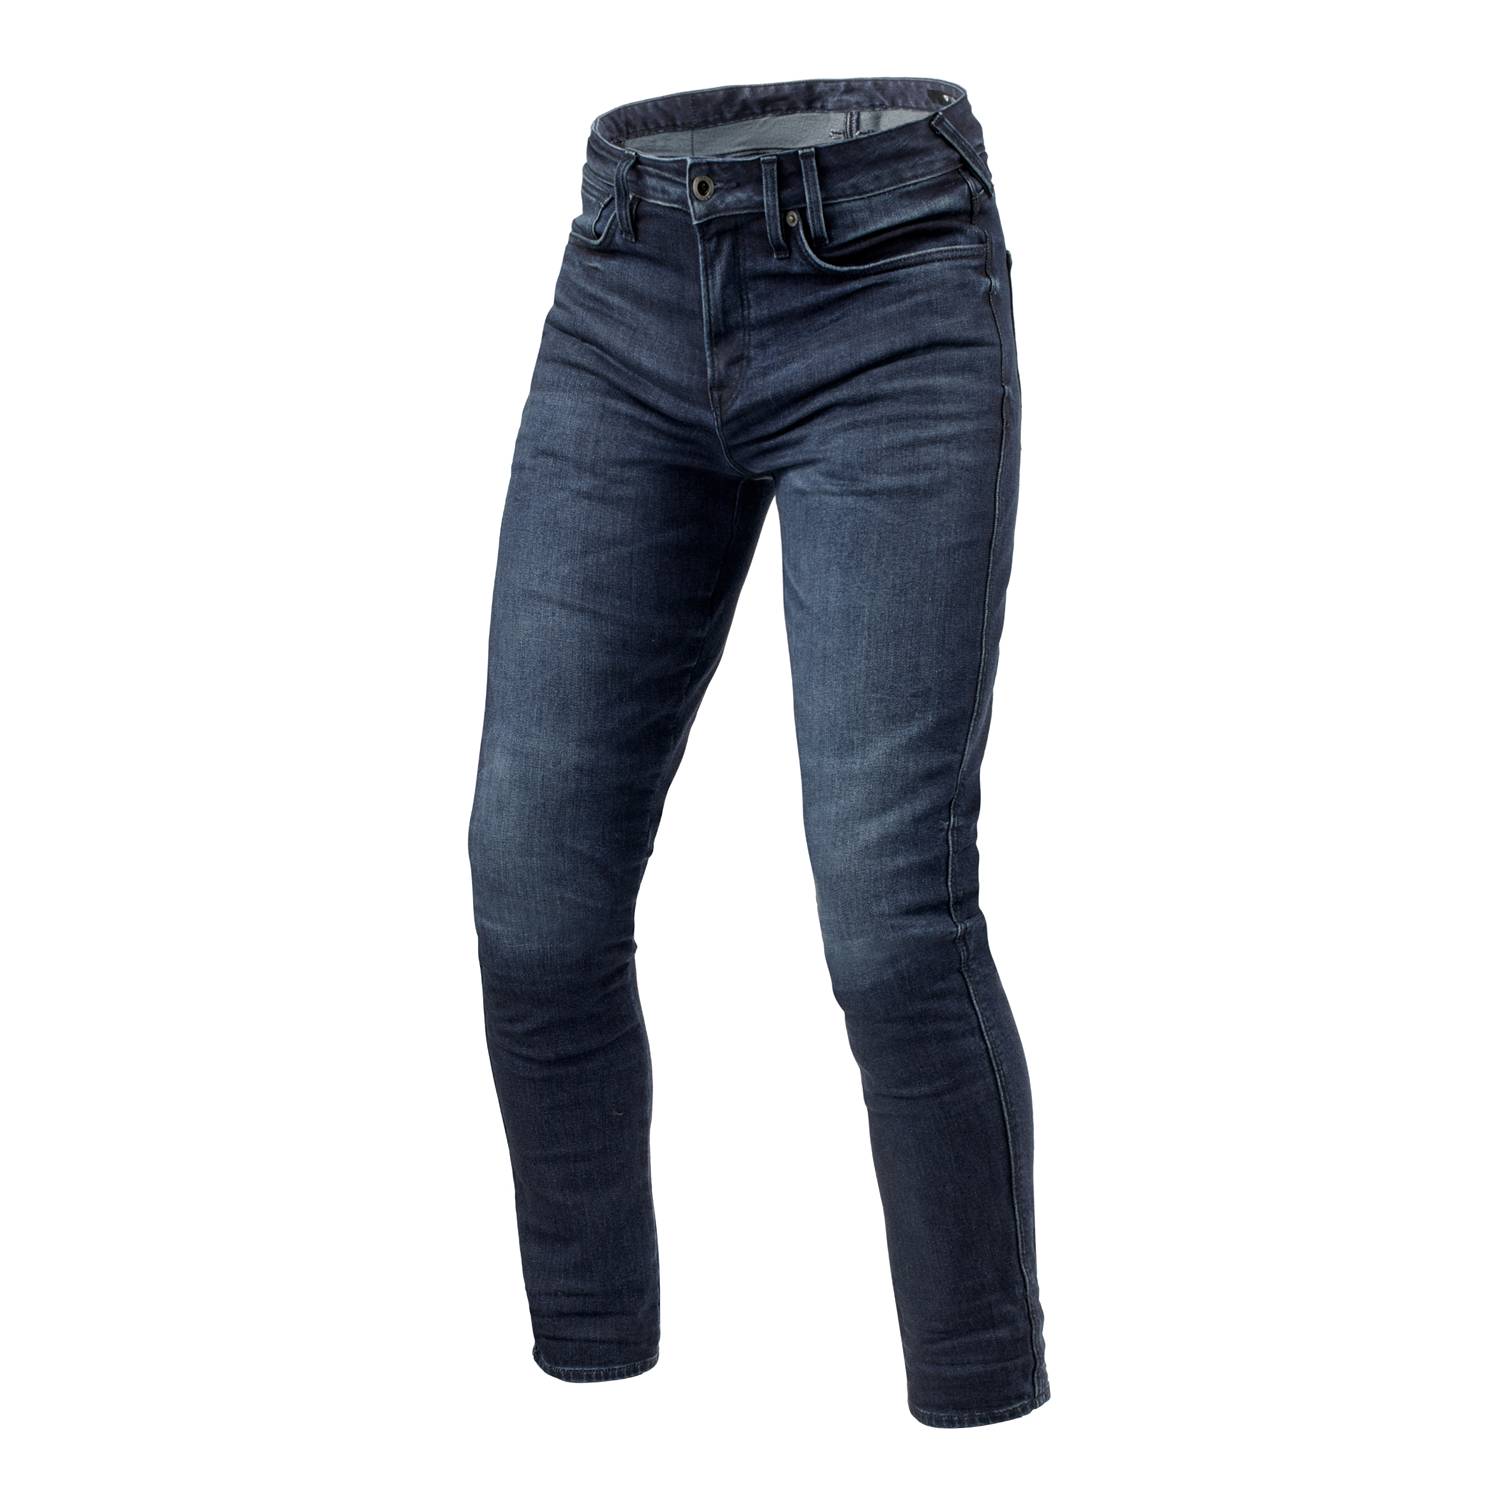 Image of REV'IT! Jeans Carlin SK Dark Blue Used L34 Motorcycle Jeans Größe L34/W34